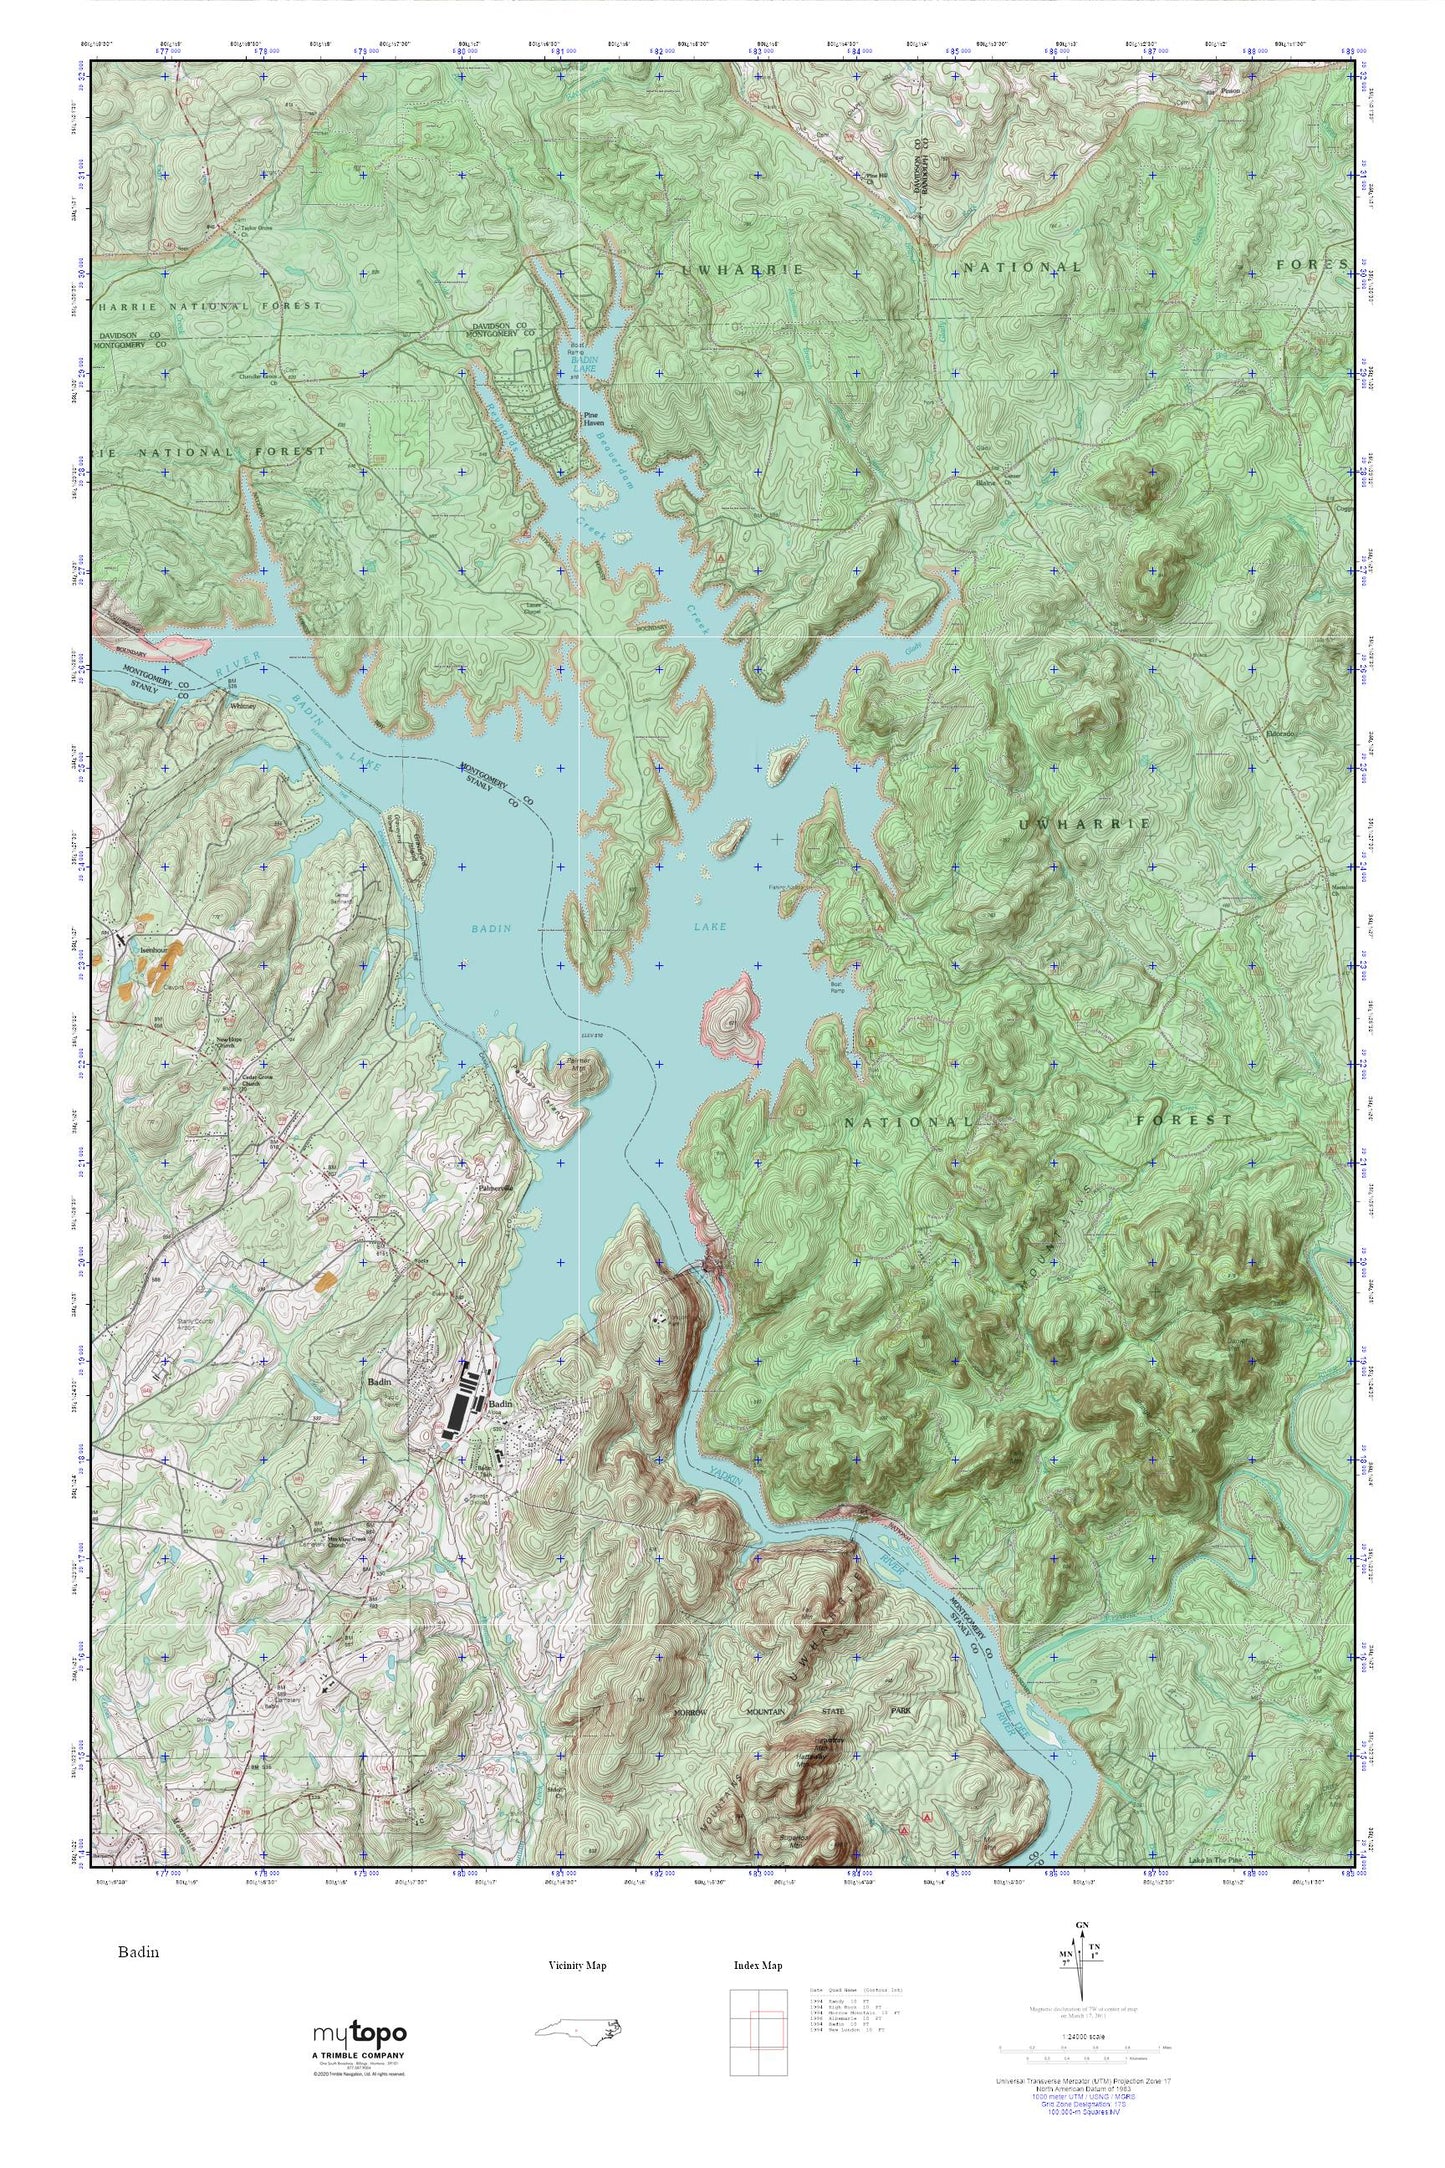 Badin Lake MyTopo Explorer Series Map Image